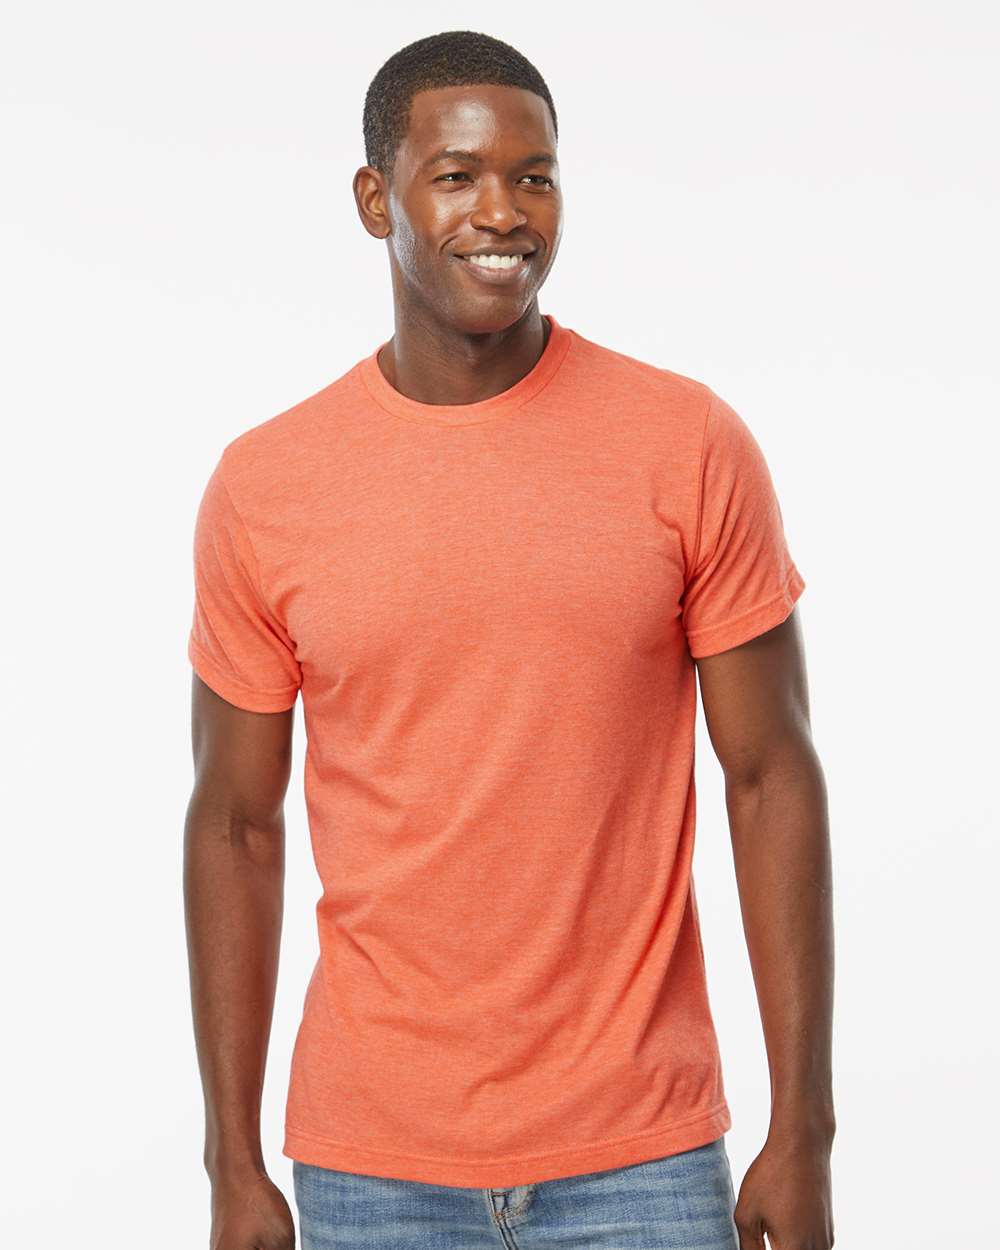 M&O Women’s Deluxe Blend T-Shirt #3540 Heather Orange